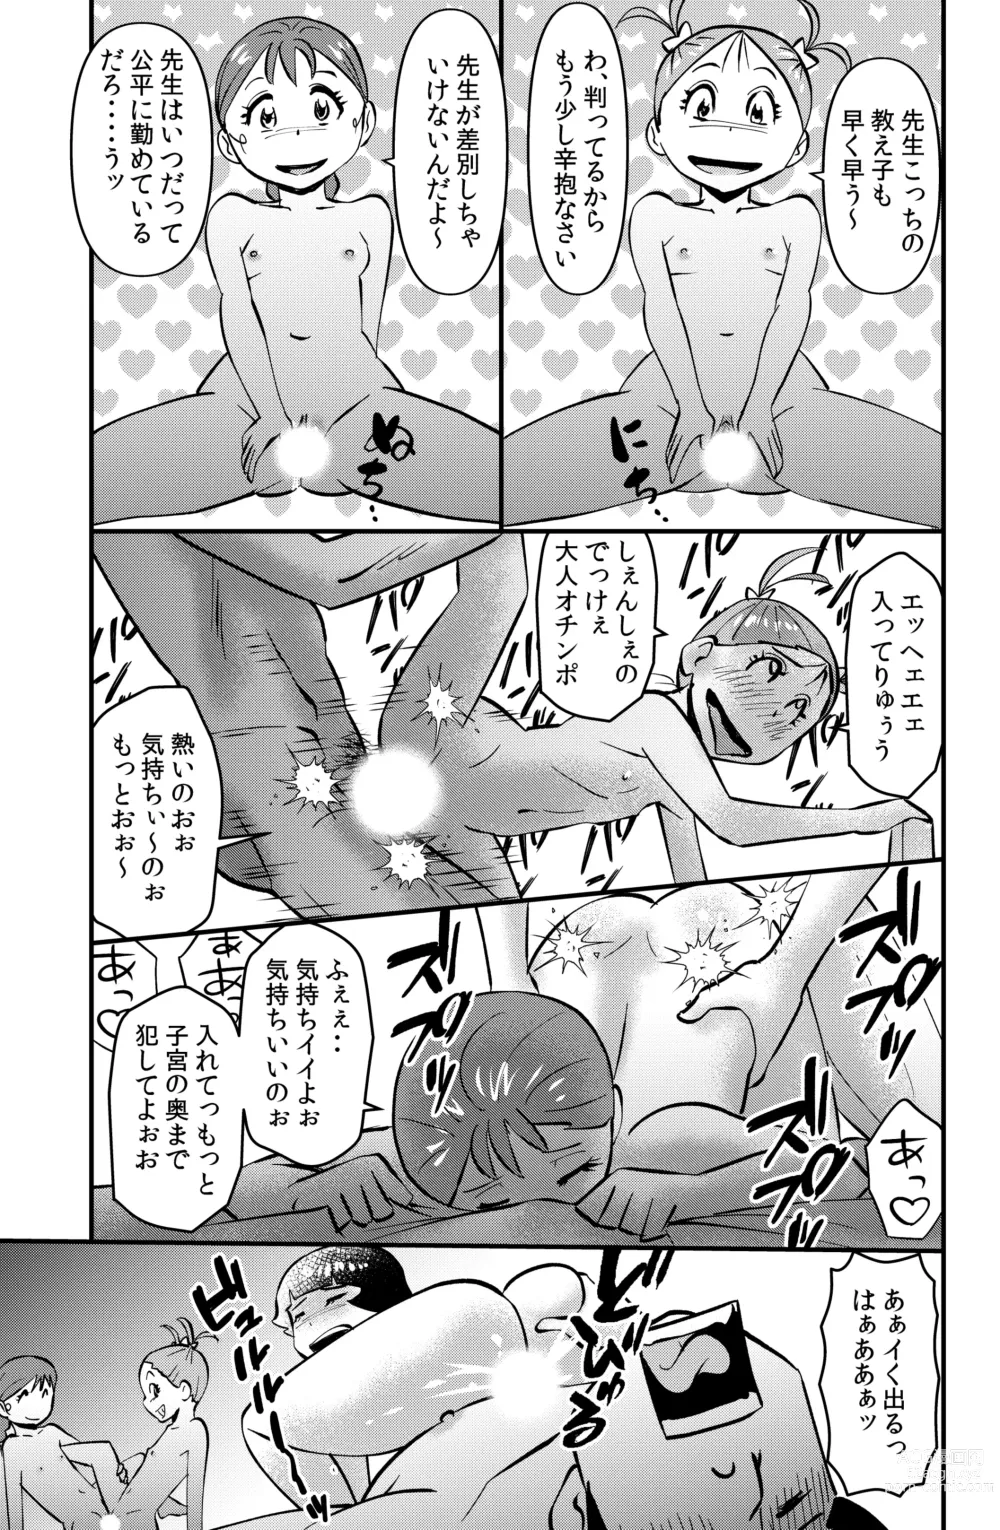 Page 5 of doujinshi Sasaguri-san Chi no Wareme-chan